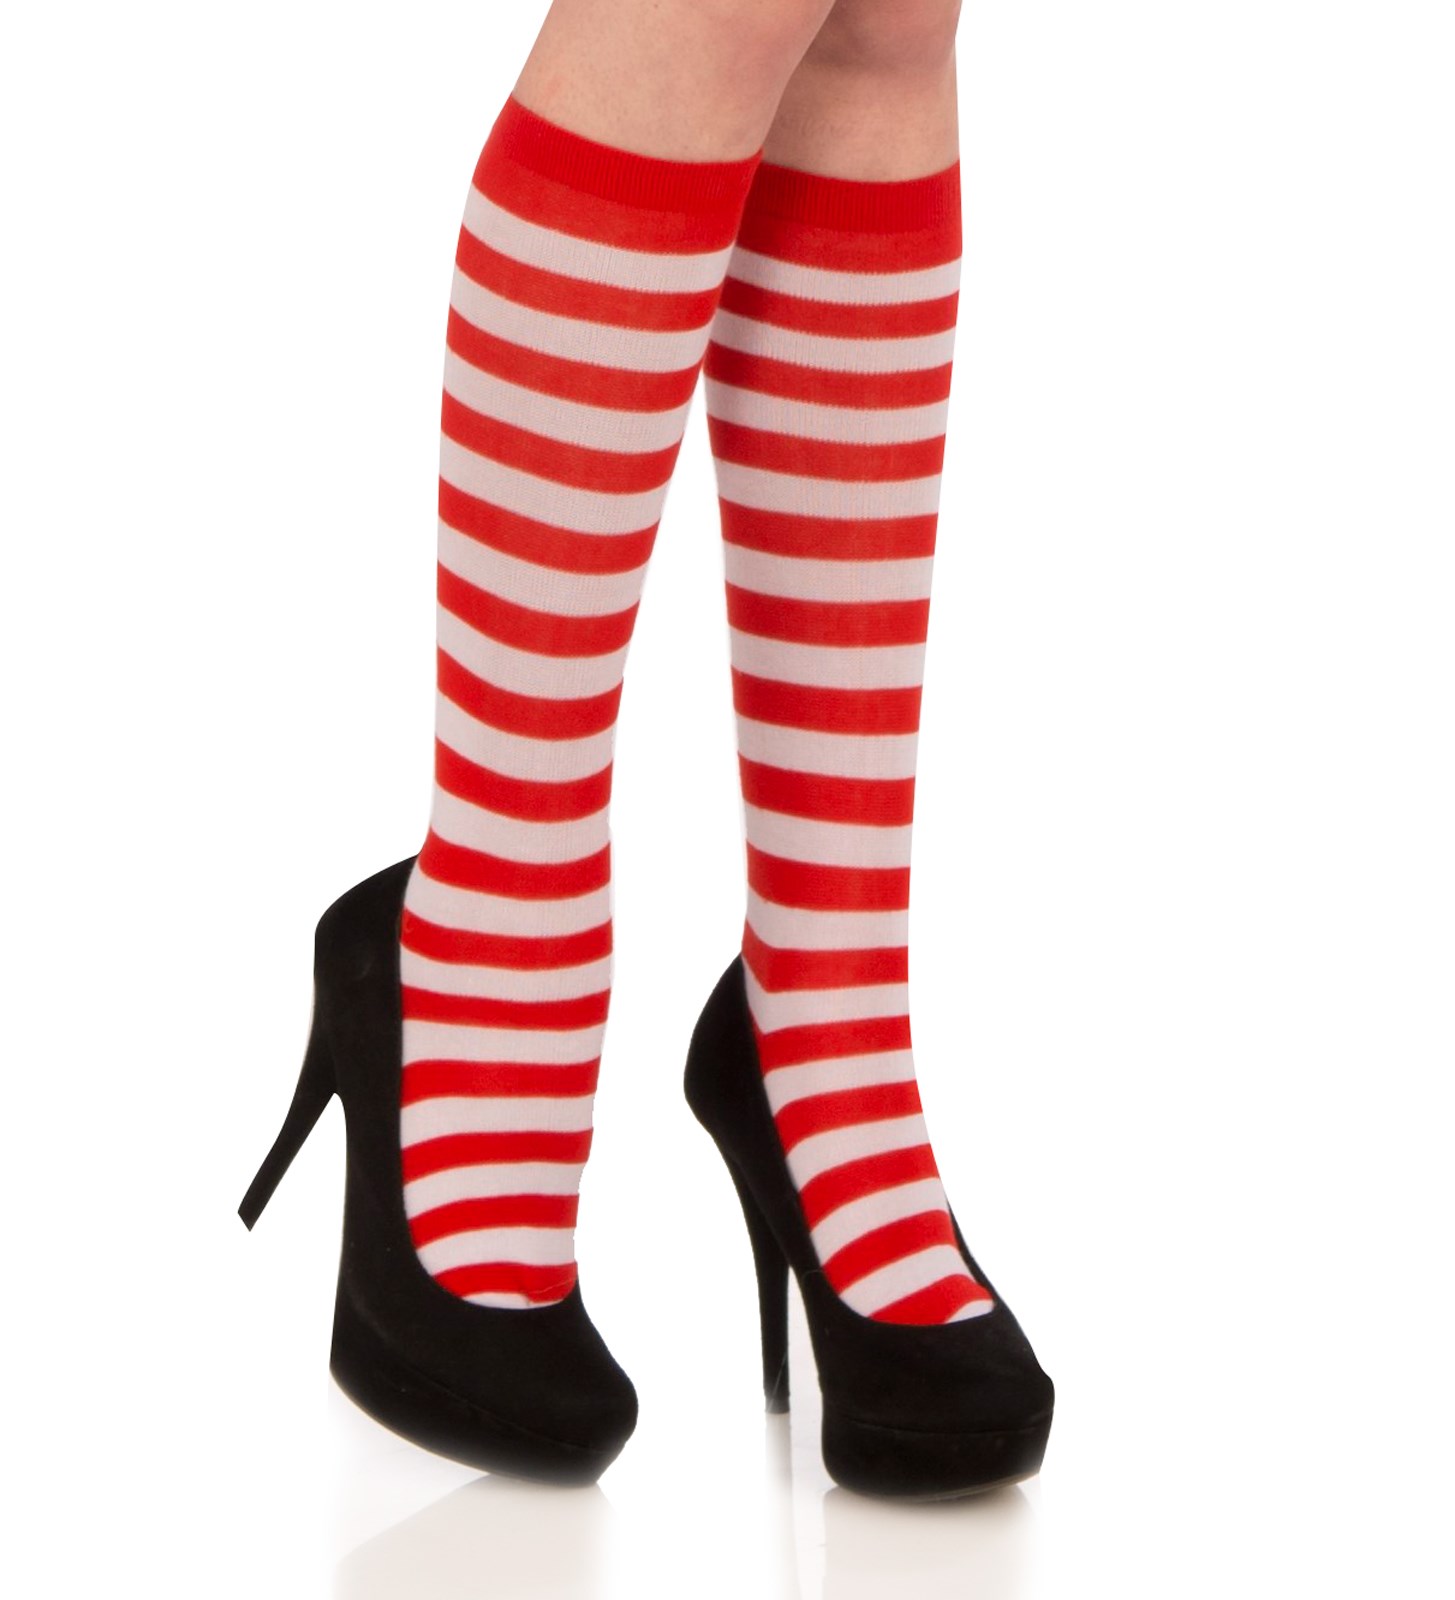 Wheres Waldo - Wenda Socks Adult